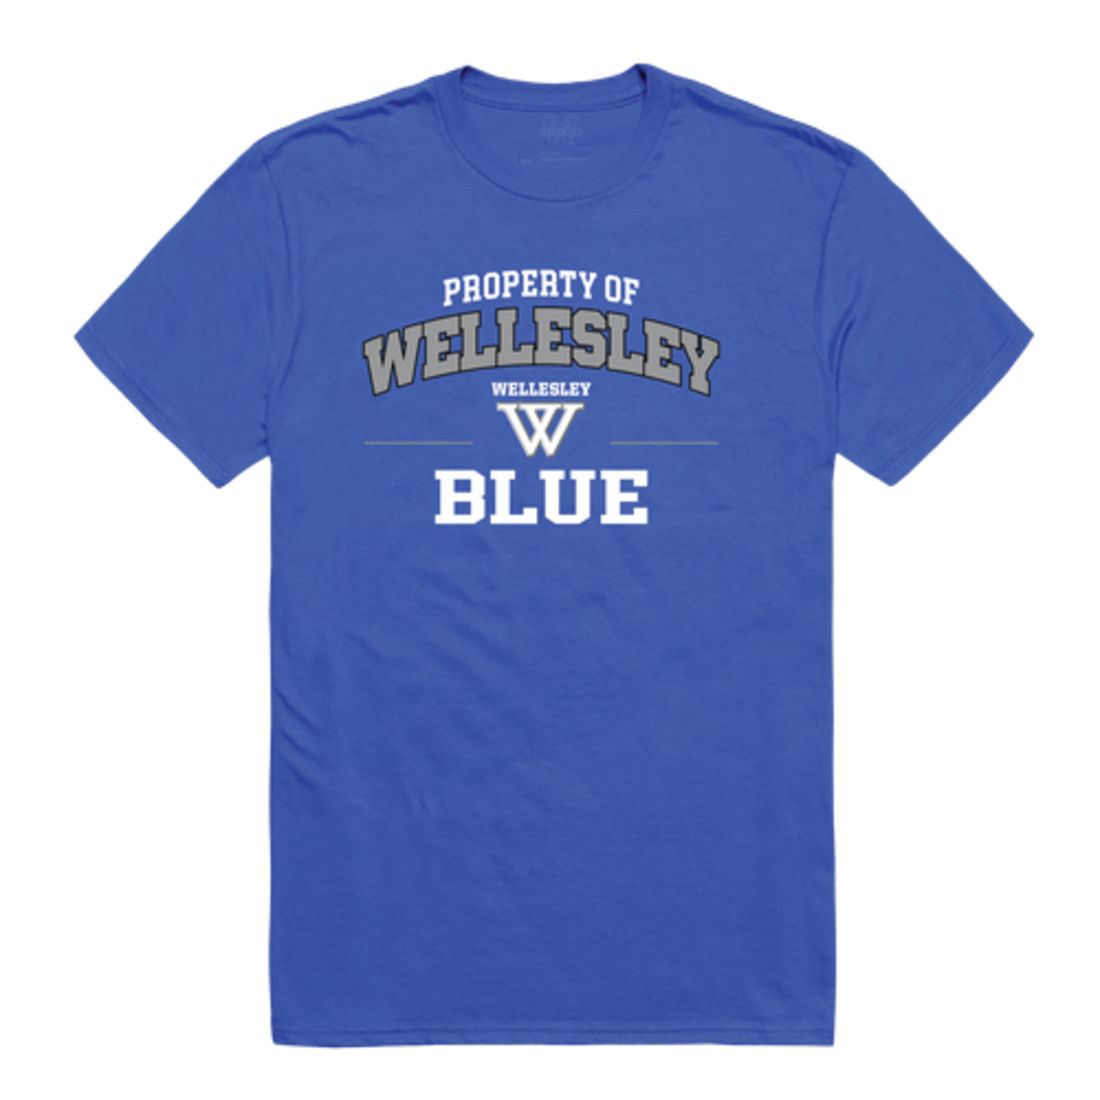 Wellesley College Blue Property T-Shirt Tee